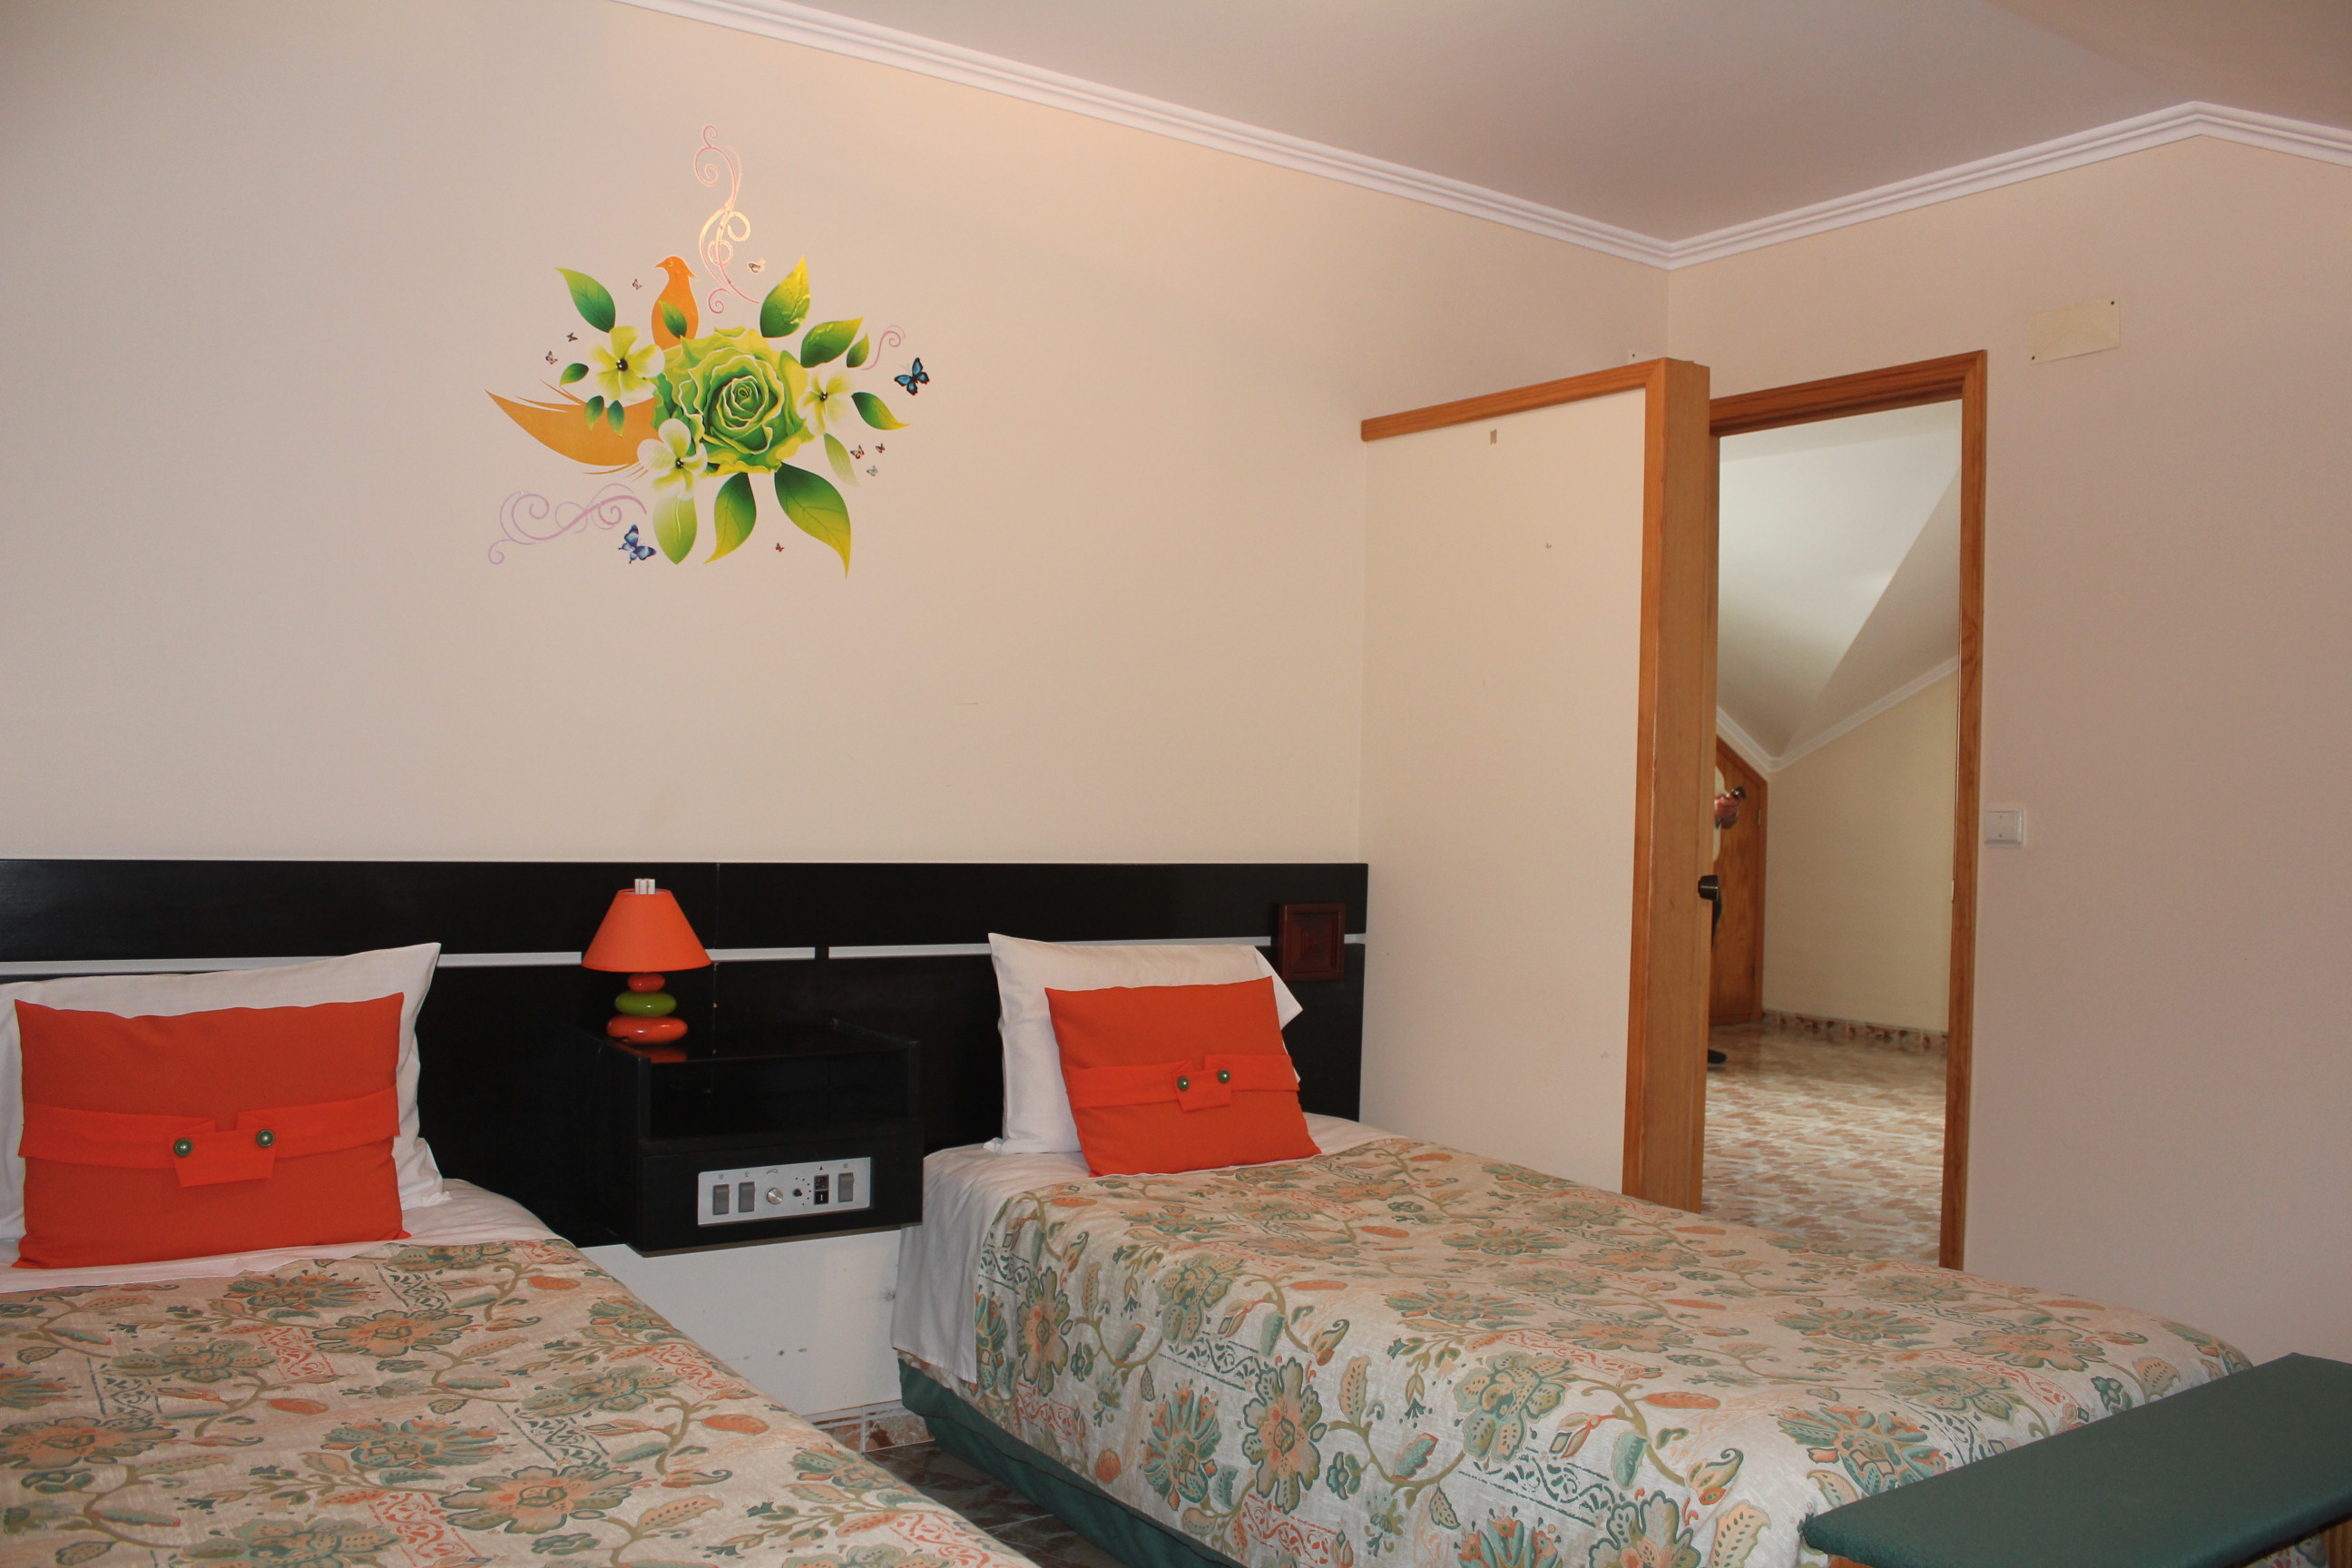 AL-NovaVista_apartment_sleeping room example_02